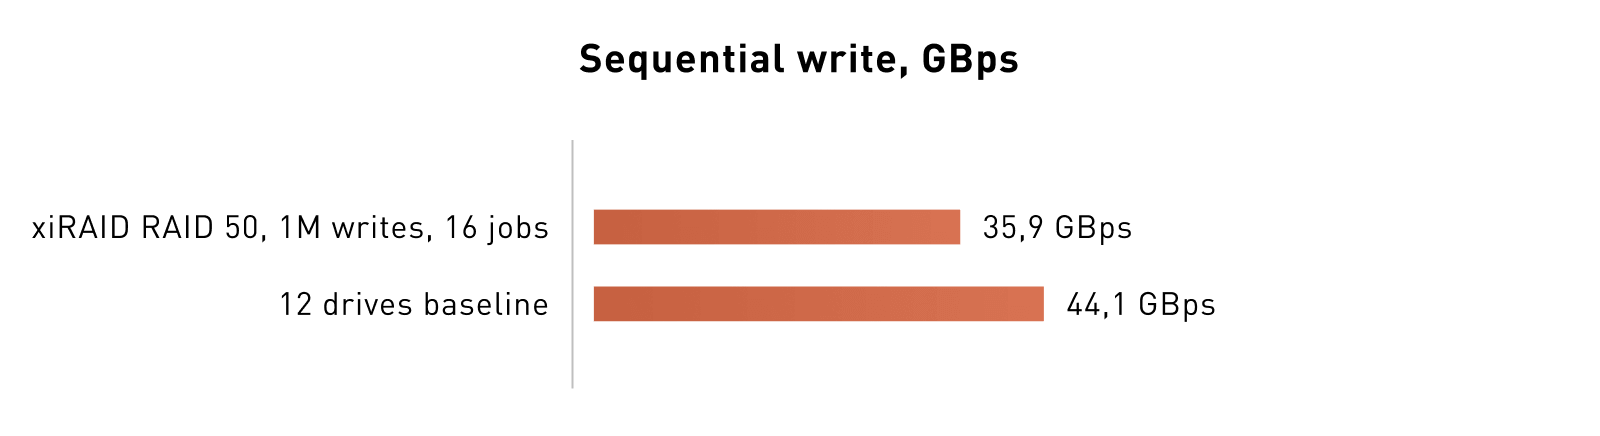 Sequential write xiRAID 5 vs 12 drives baseline